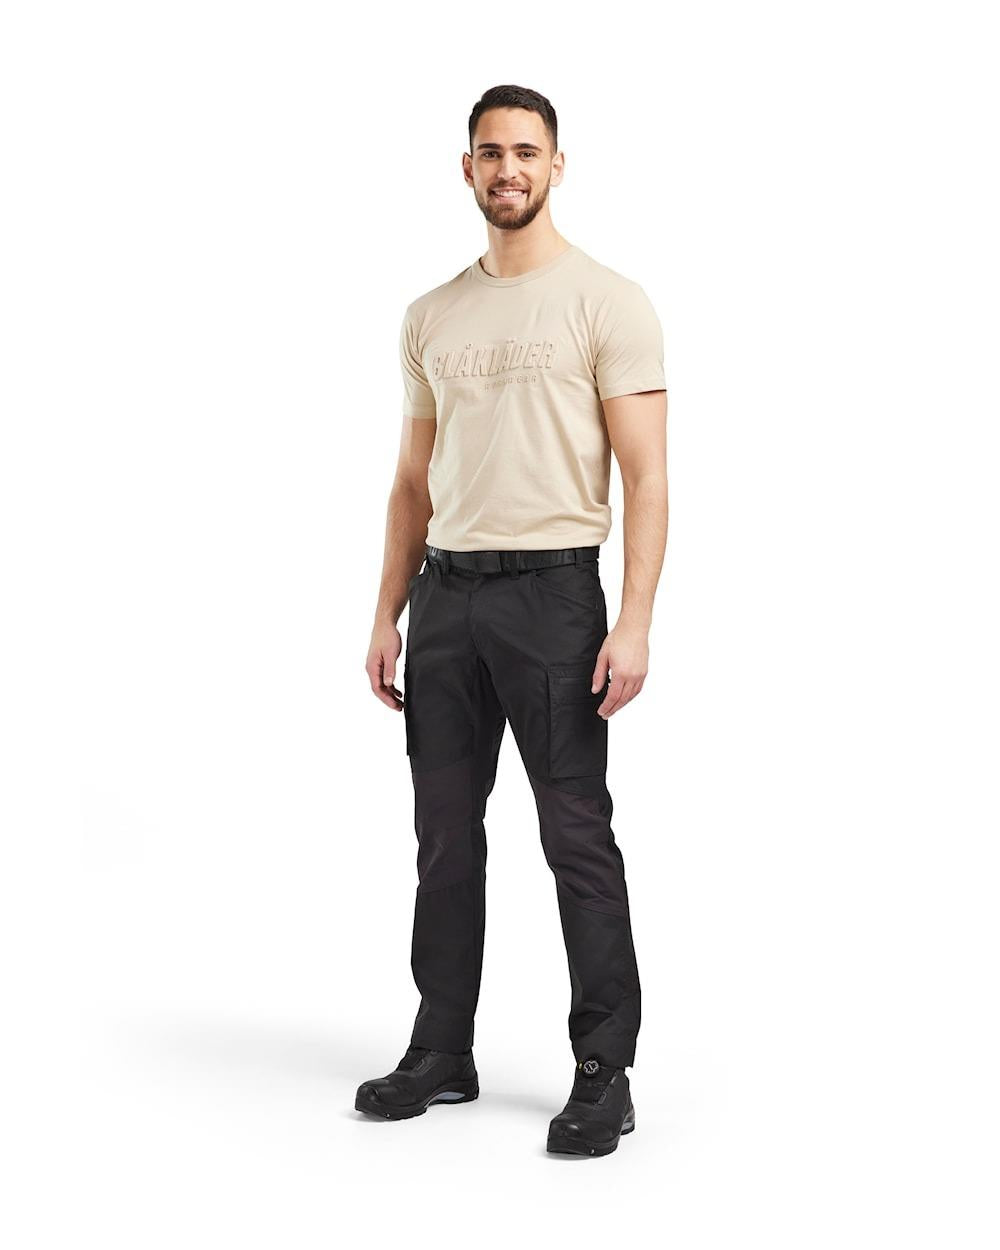 Blaklader 3D-logo warm beige men's cotton short-sleeve T-shirt #3531